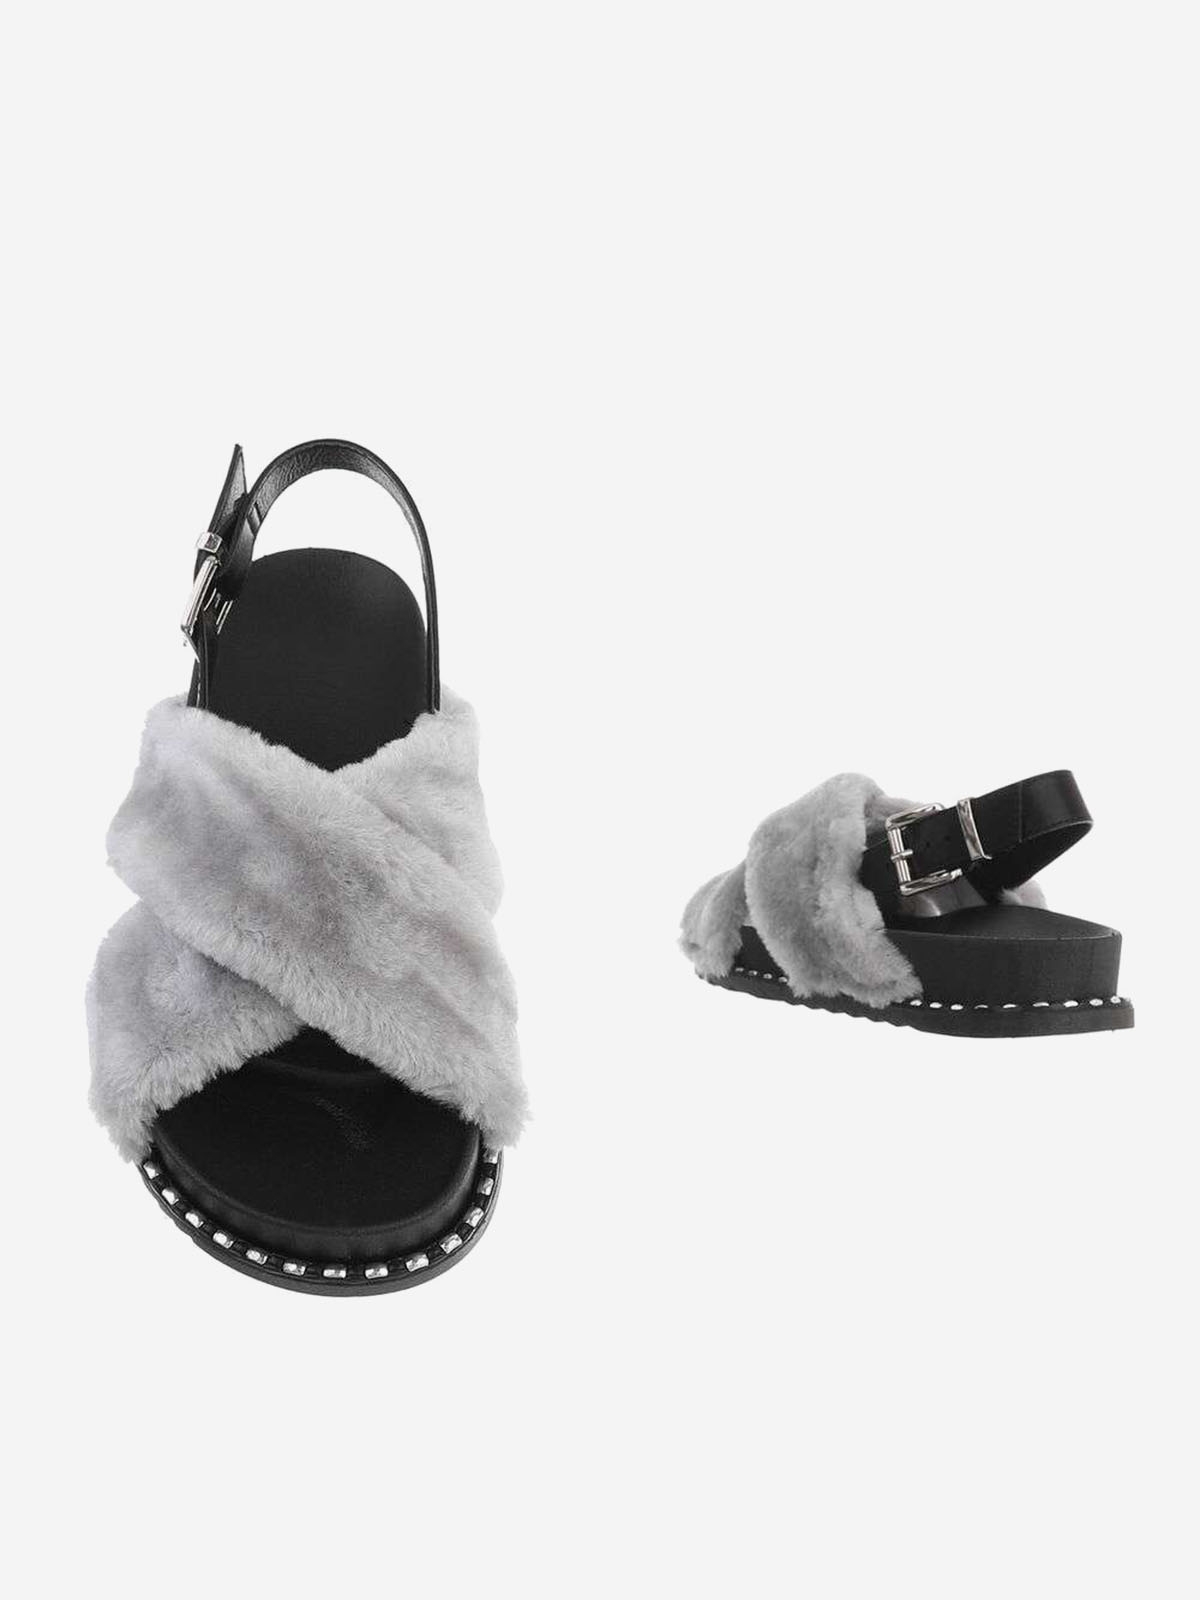 Stylish adjustable sandals with medium platform in grey